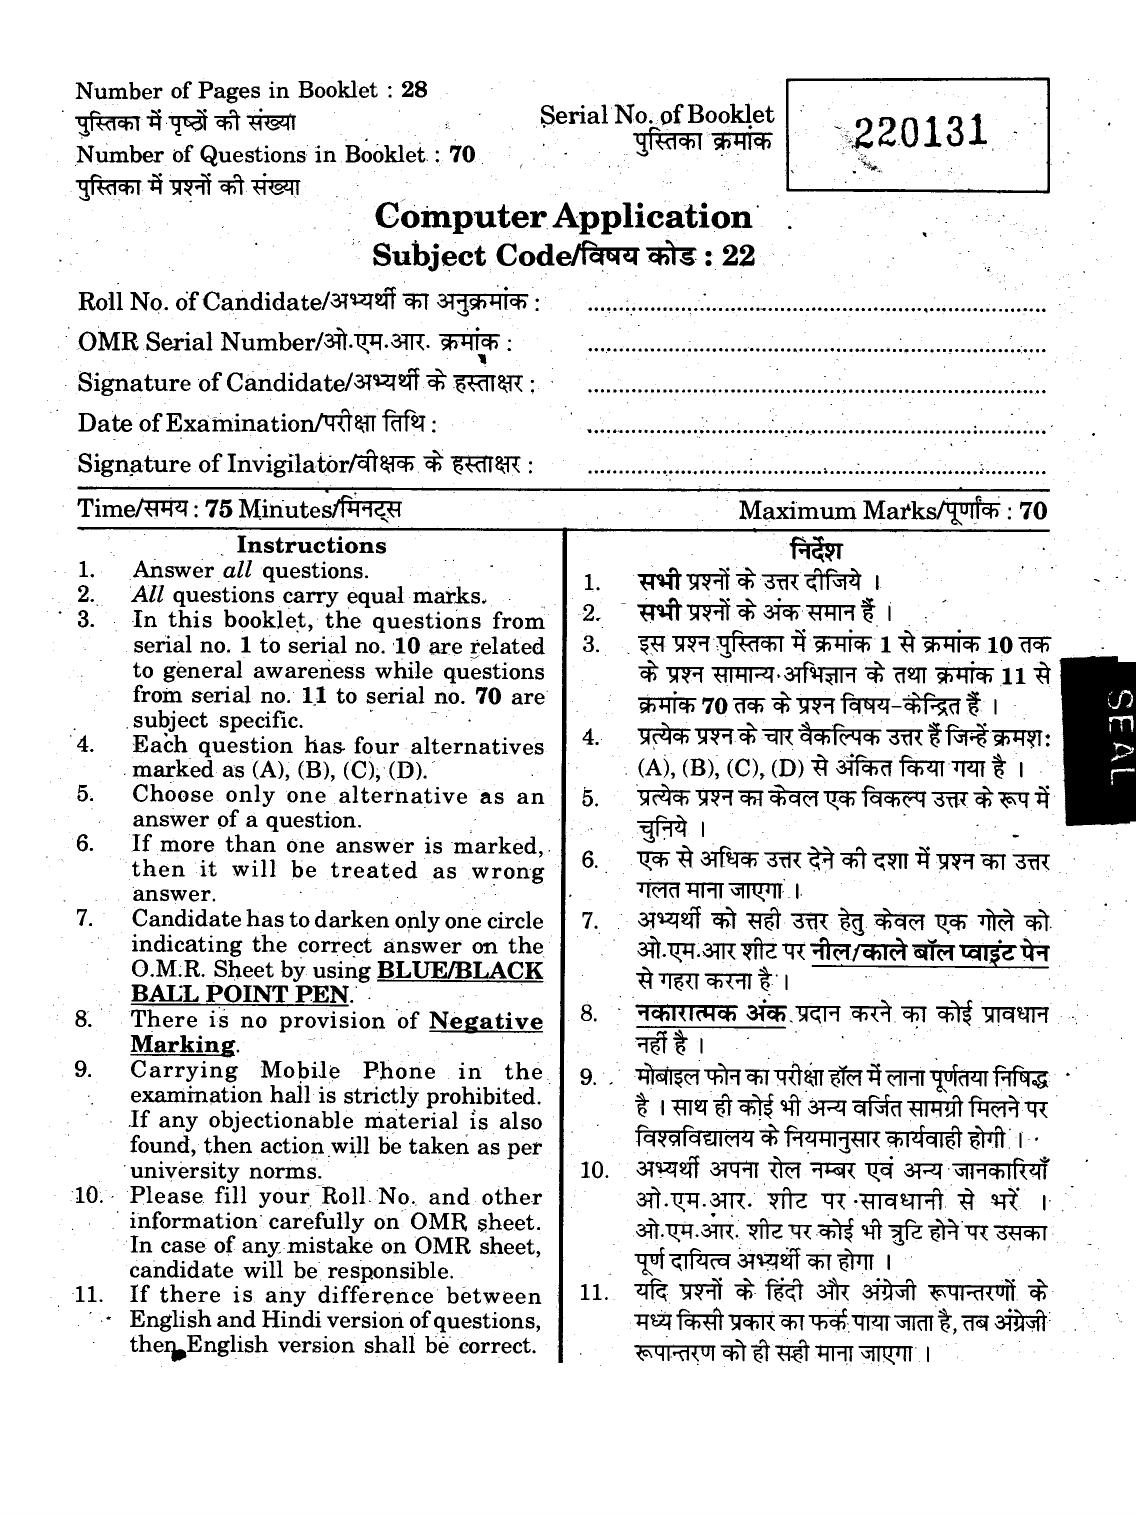 URATPG 2015 Computer Application Question Paper - Page 1